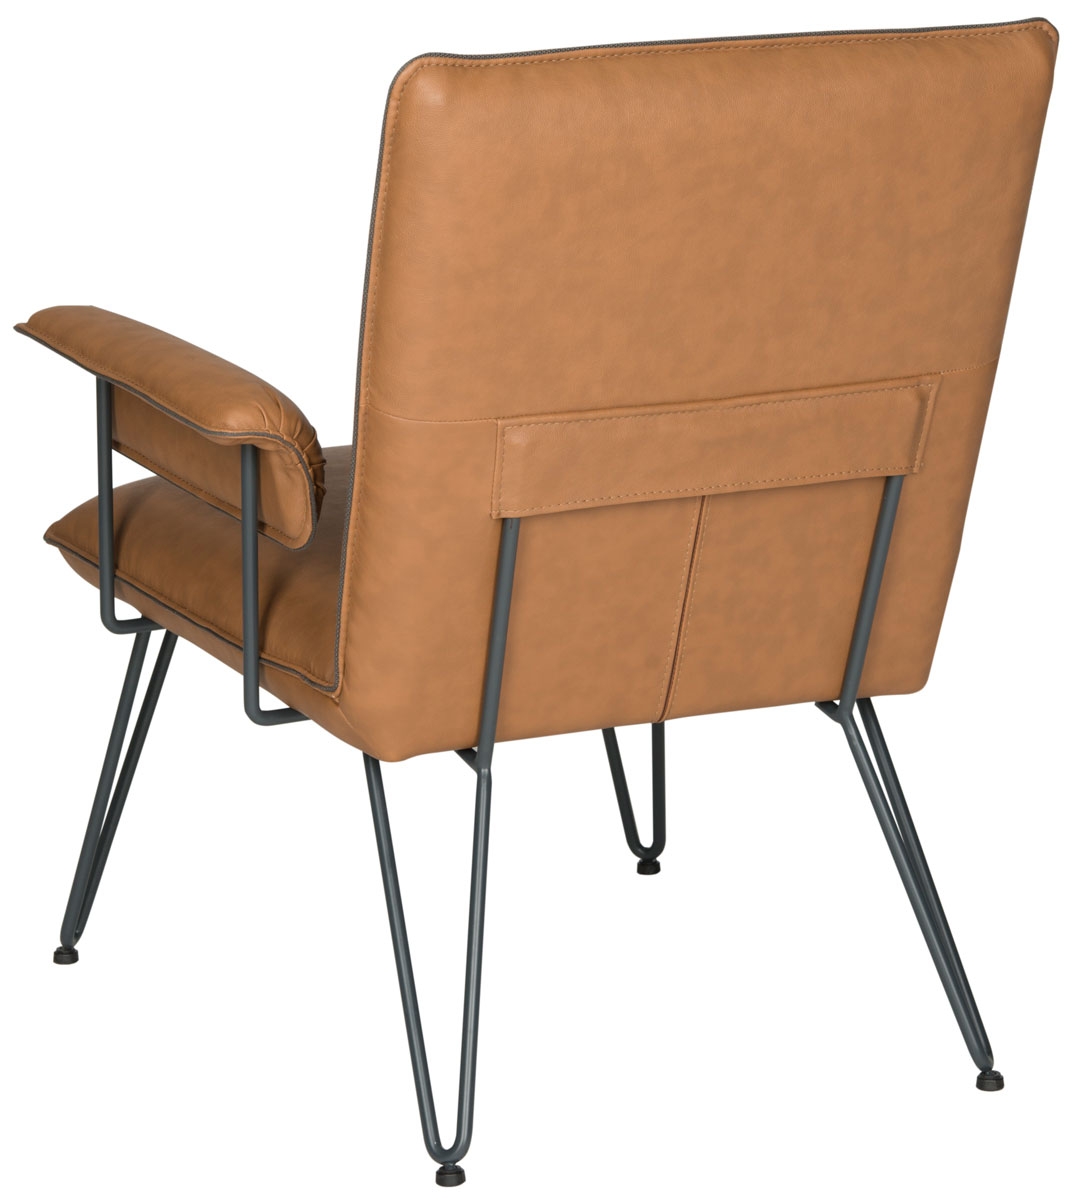 Johannes 17.3"H Mid Century Modern Leather Arm Chair - Camel/Black - Arlo Home - Image 2